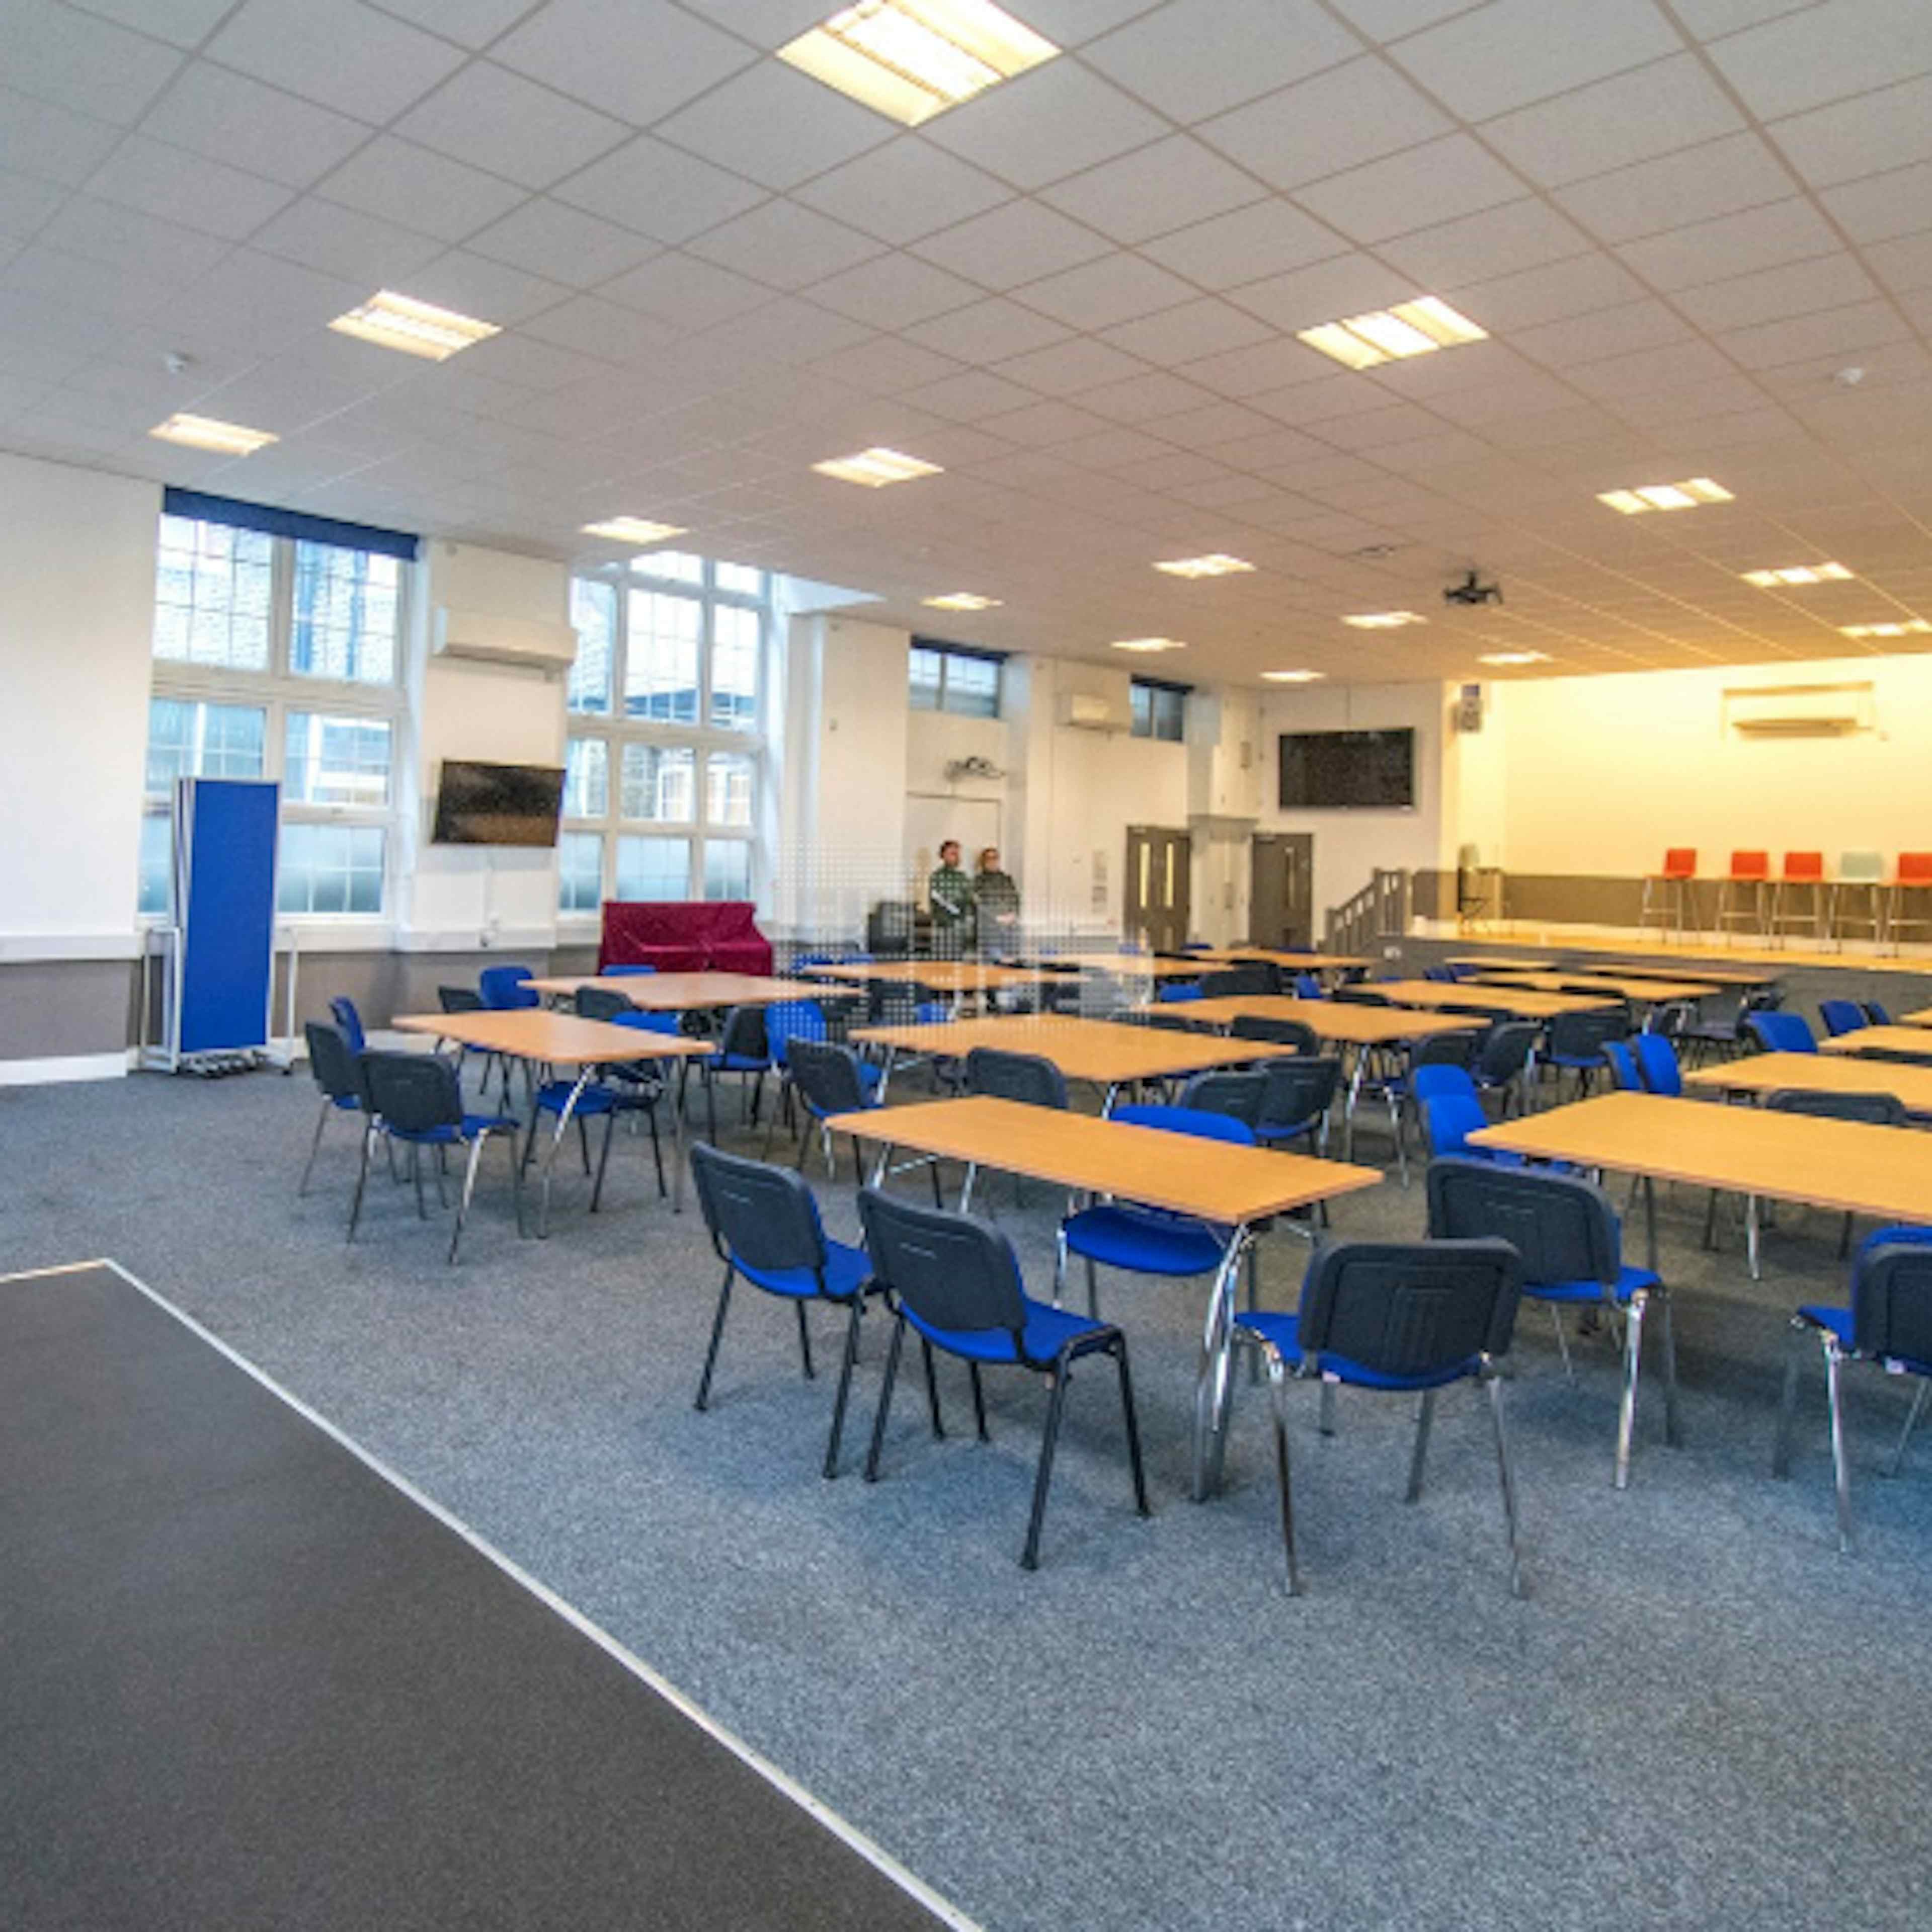 Professional Development Centre - Main Hall image 3